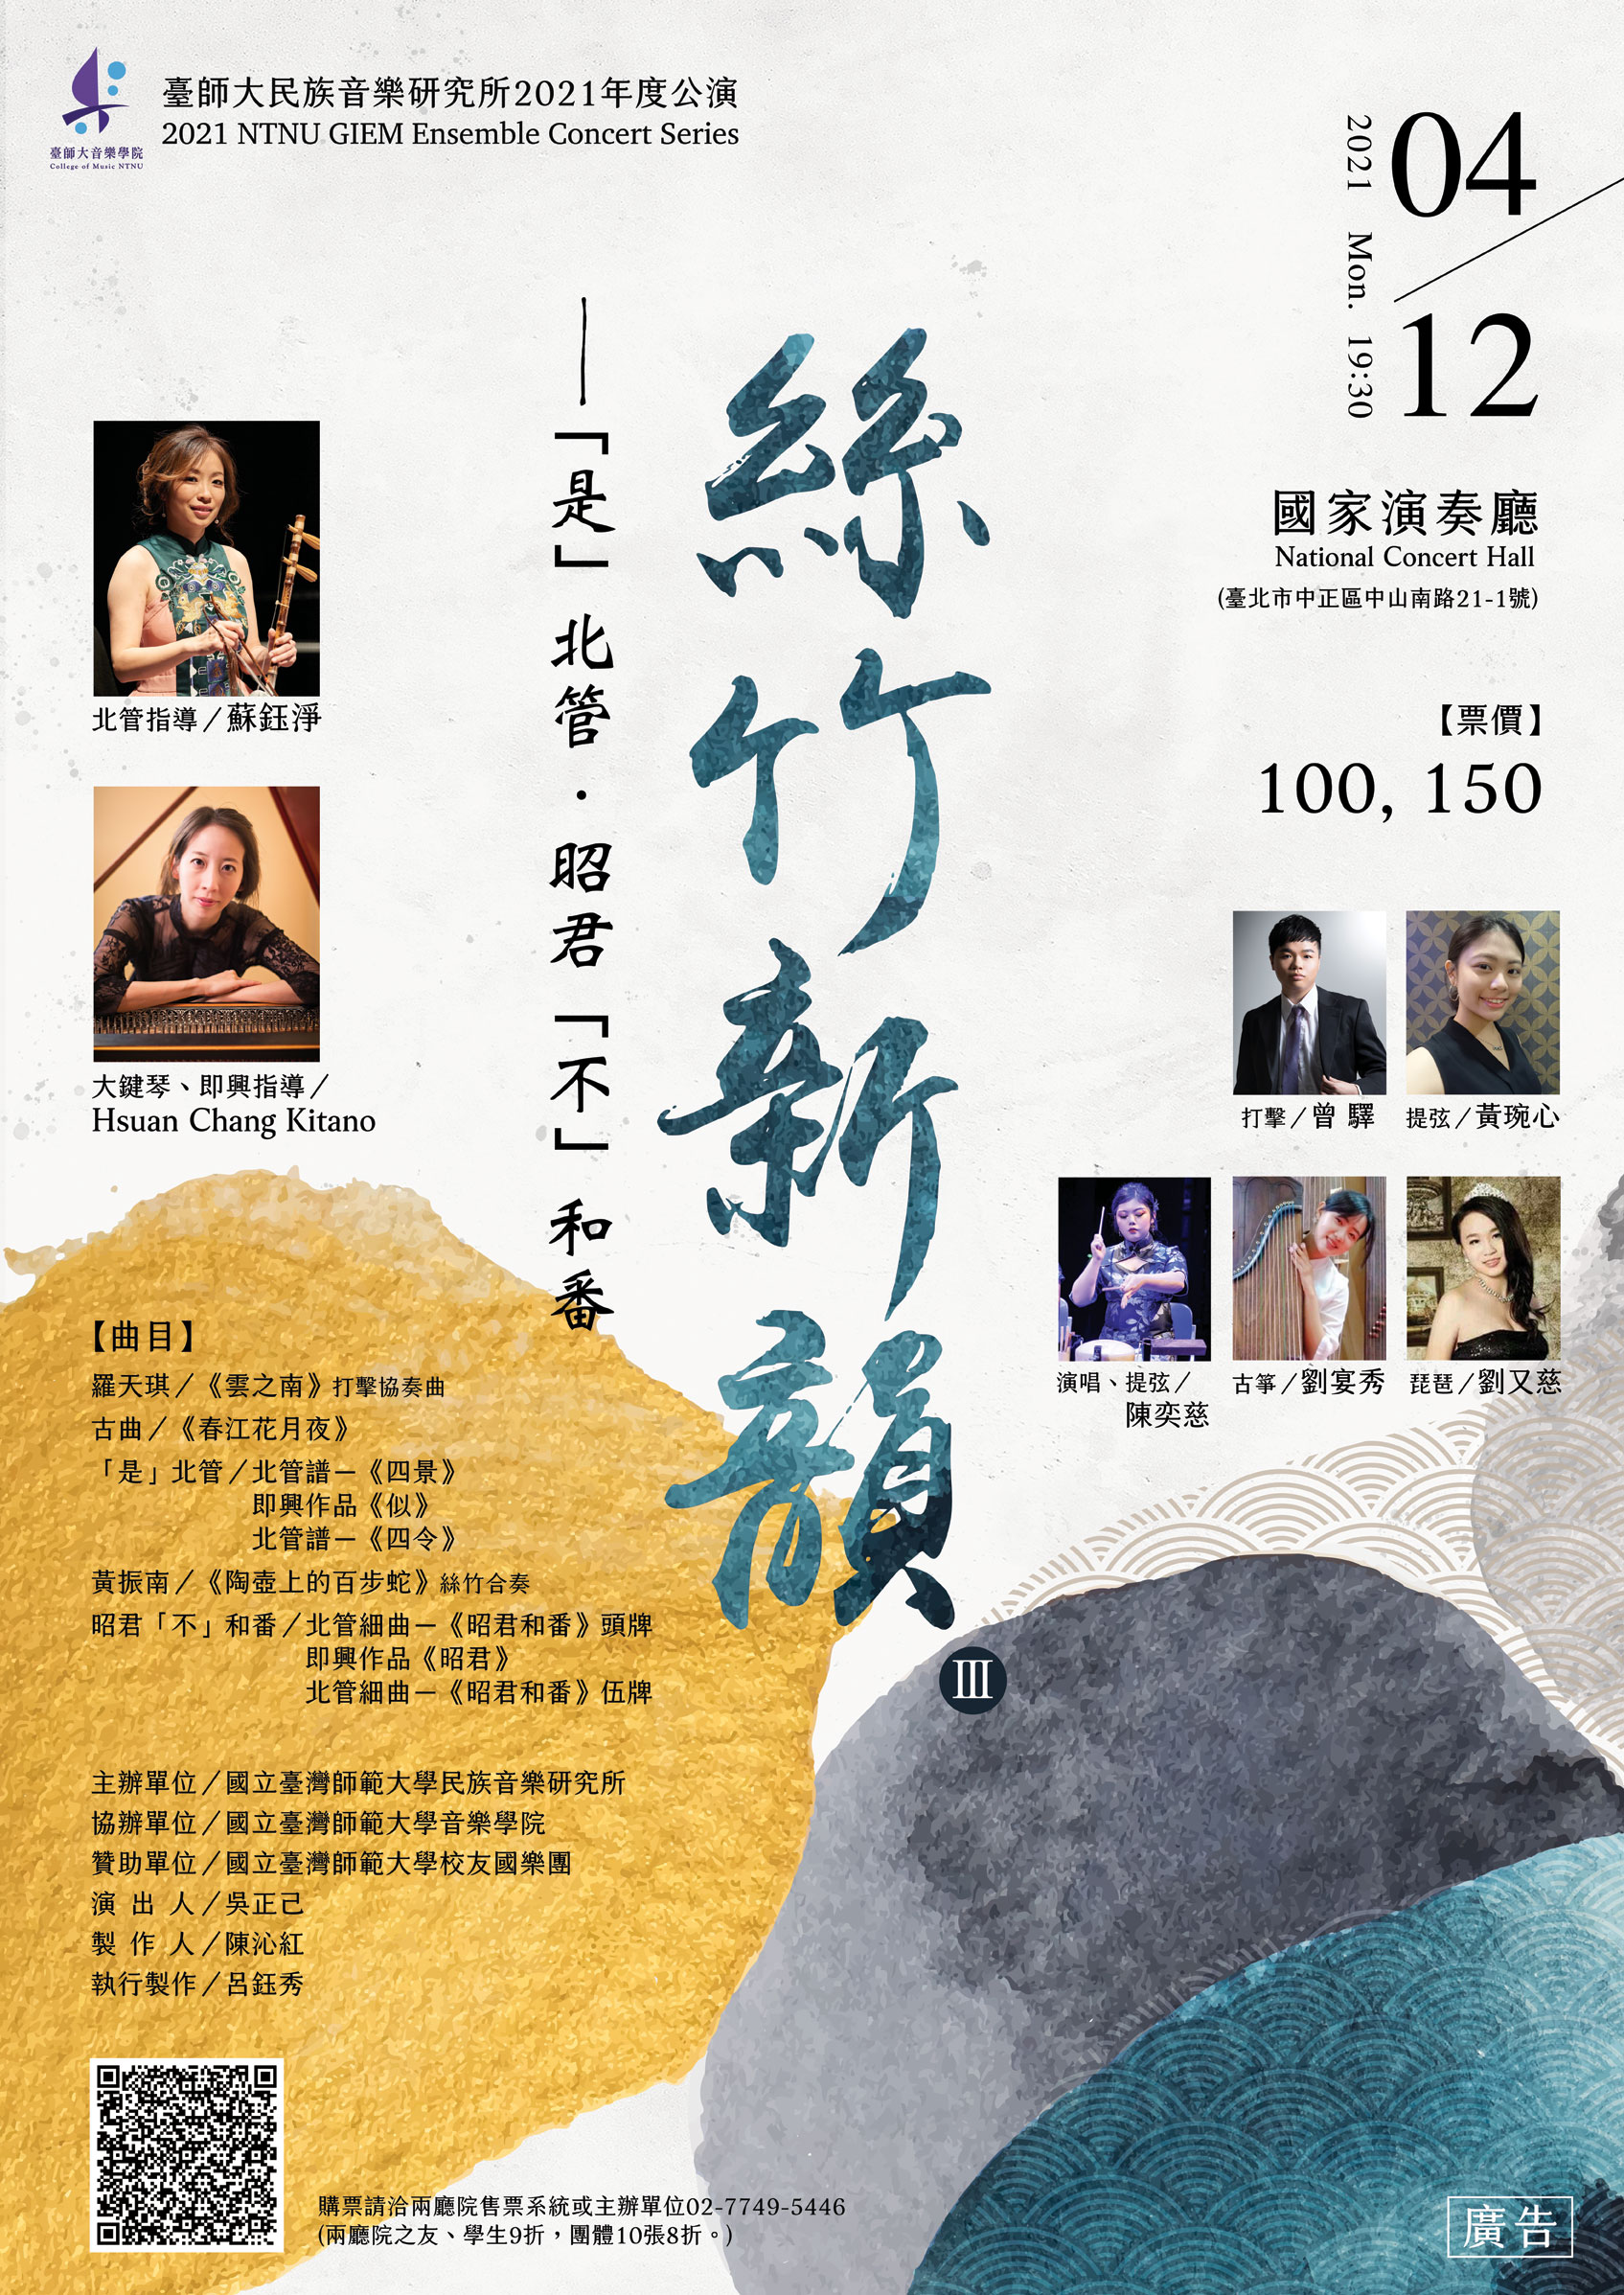 2021 NTNU GIEM Ensemble Concert Series